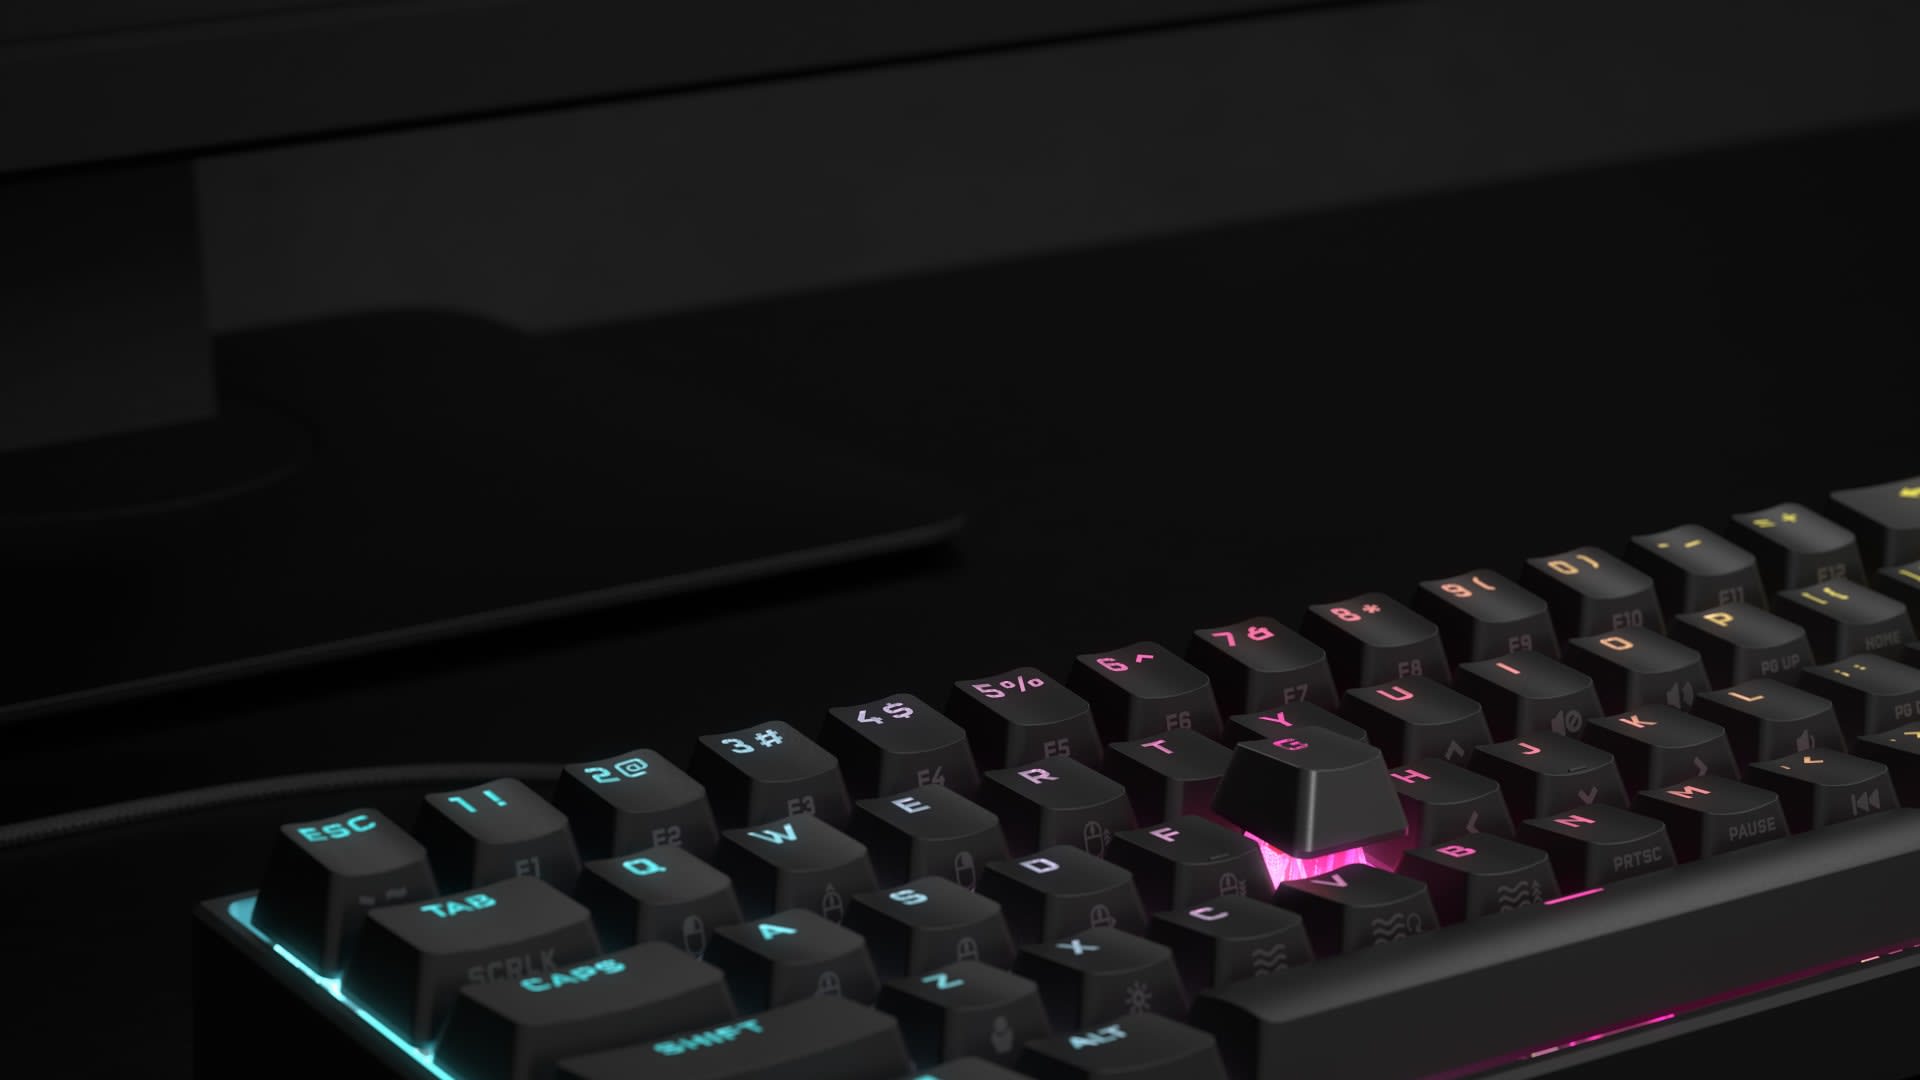 K65 RGB MINI 60% Mechanical Gaming Keyboard — CHERRY MX 